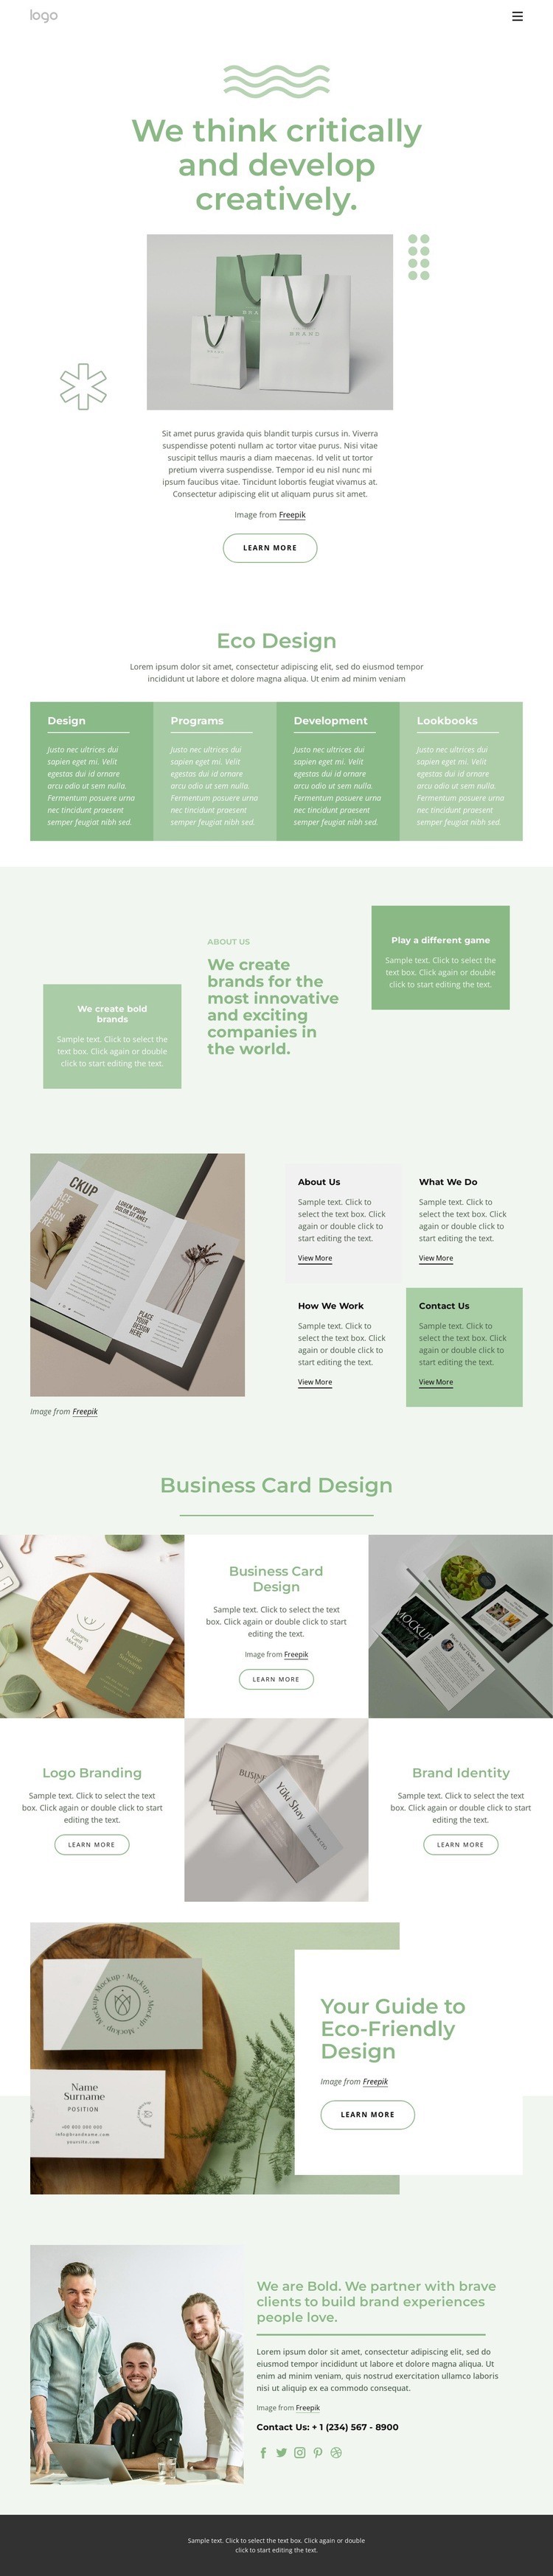 Ecodesign studio Web Page Design